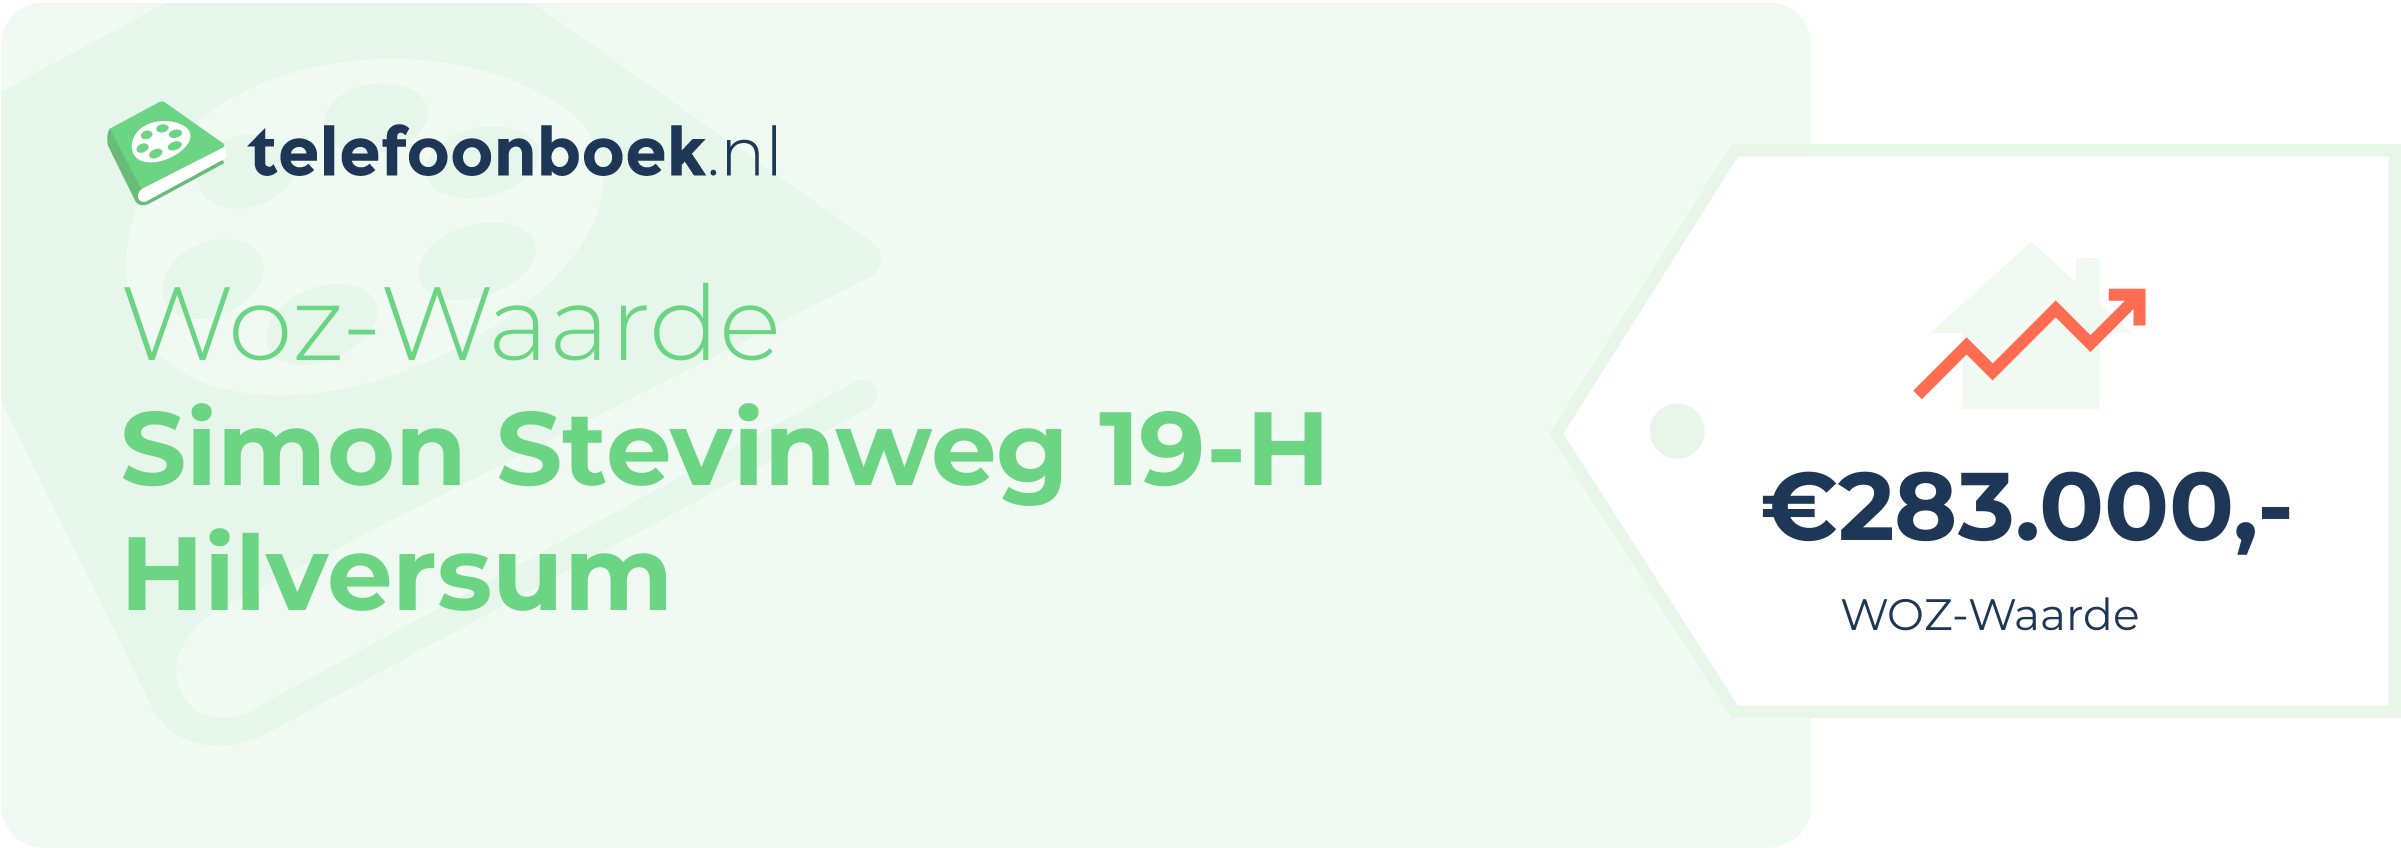 WOZ-waarde Simon Stevinweg 19-H Hilversum